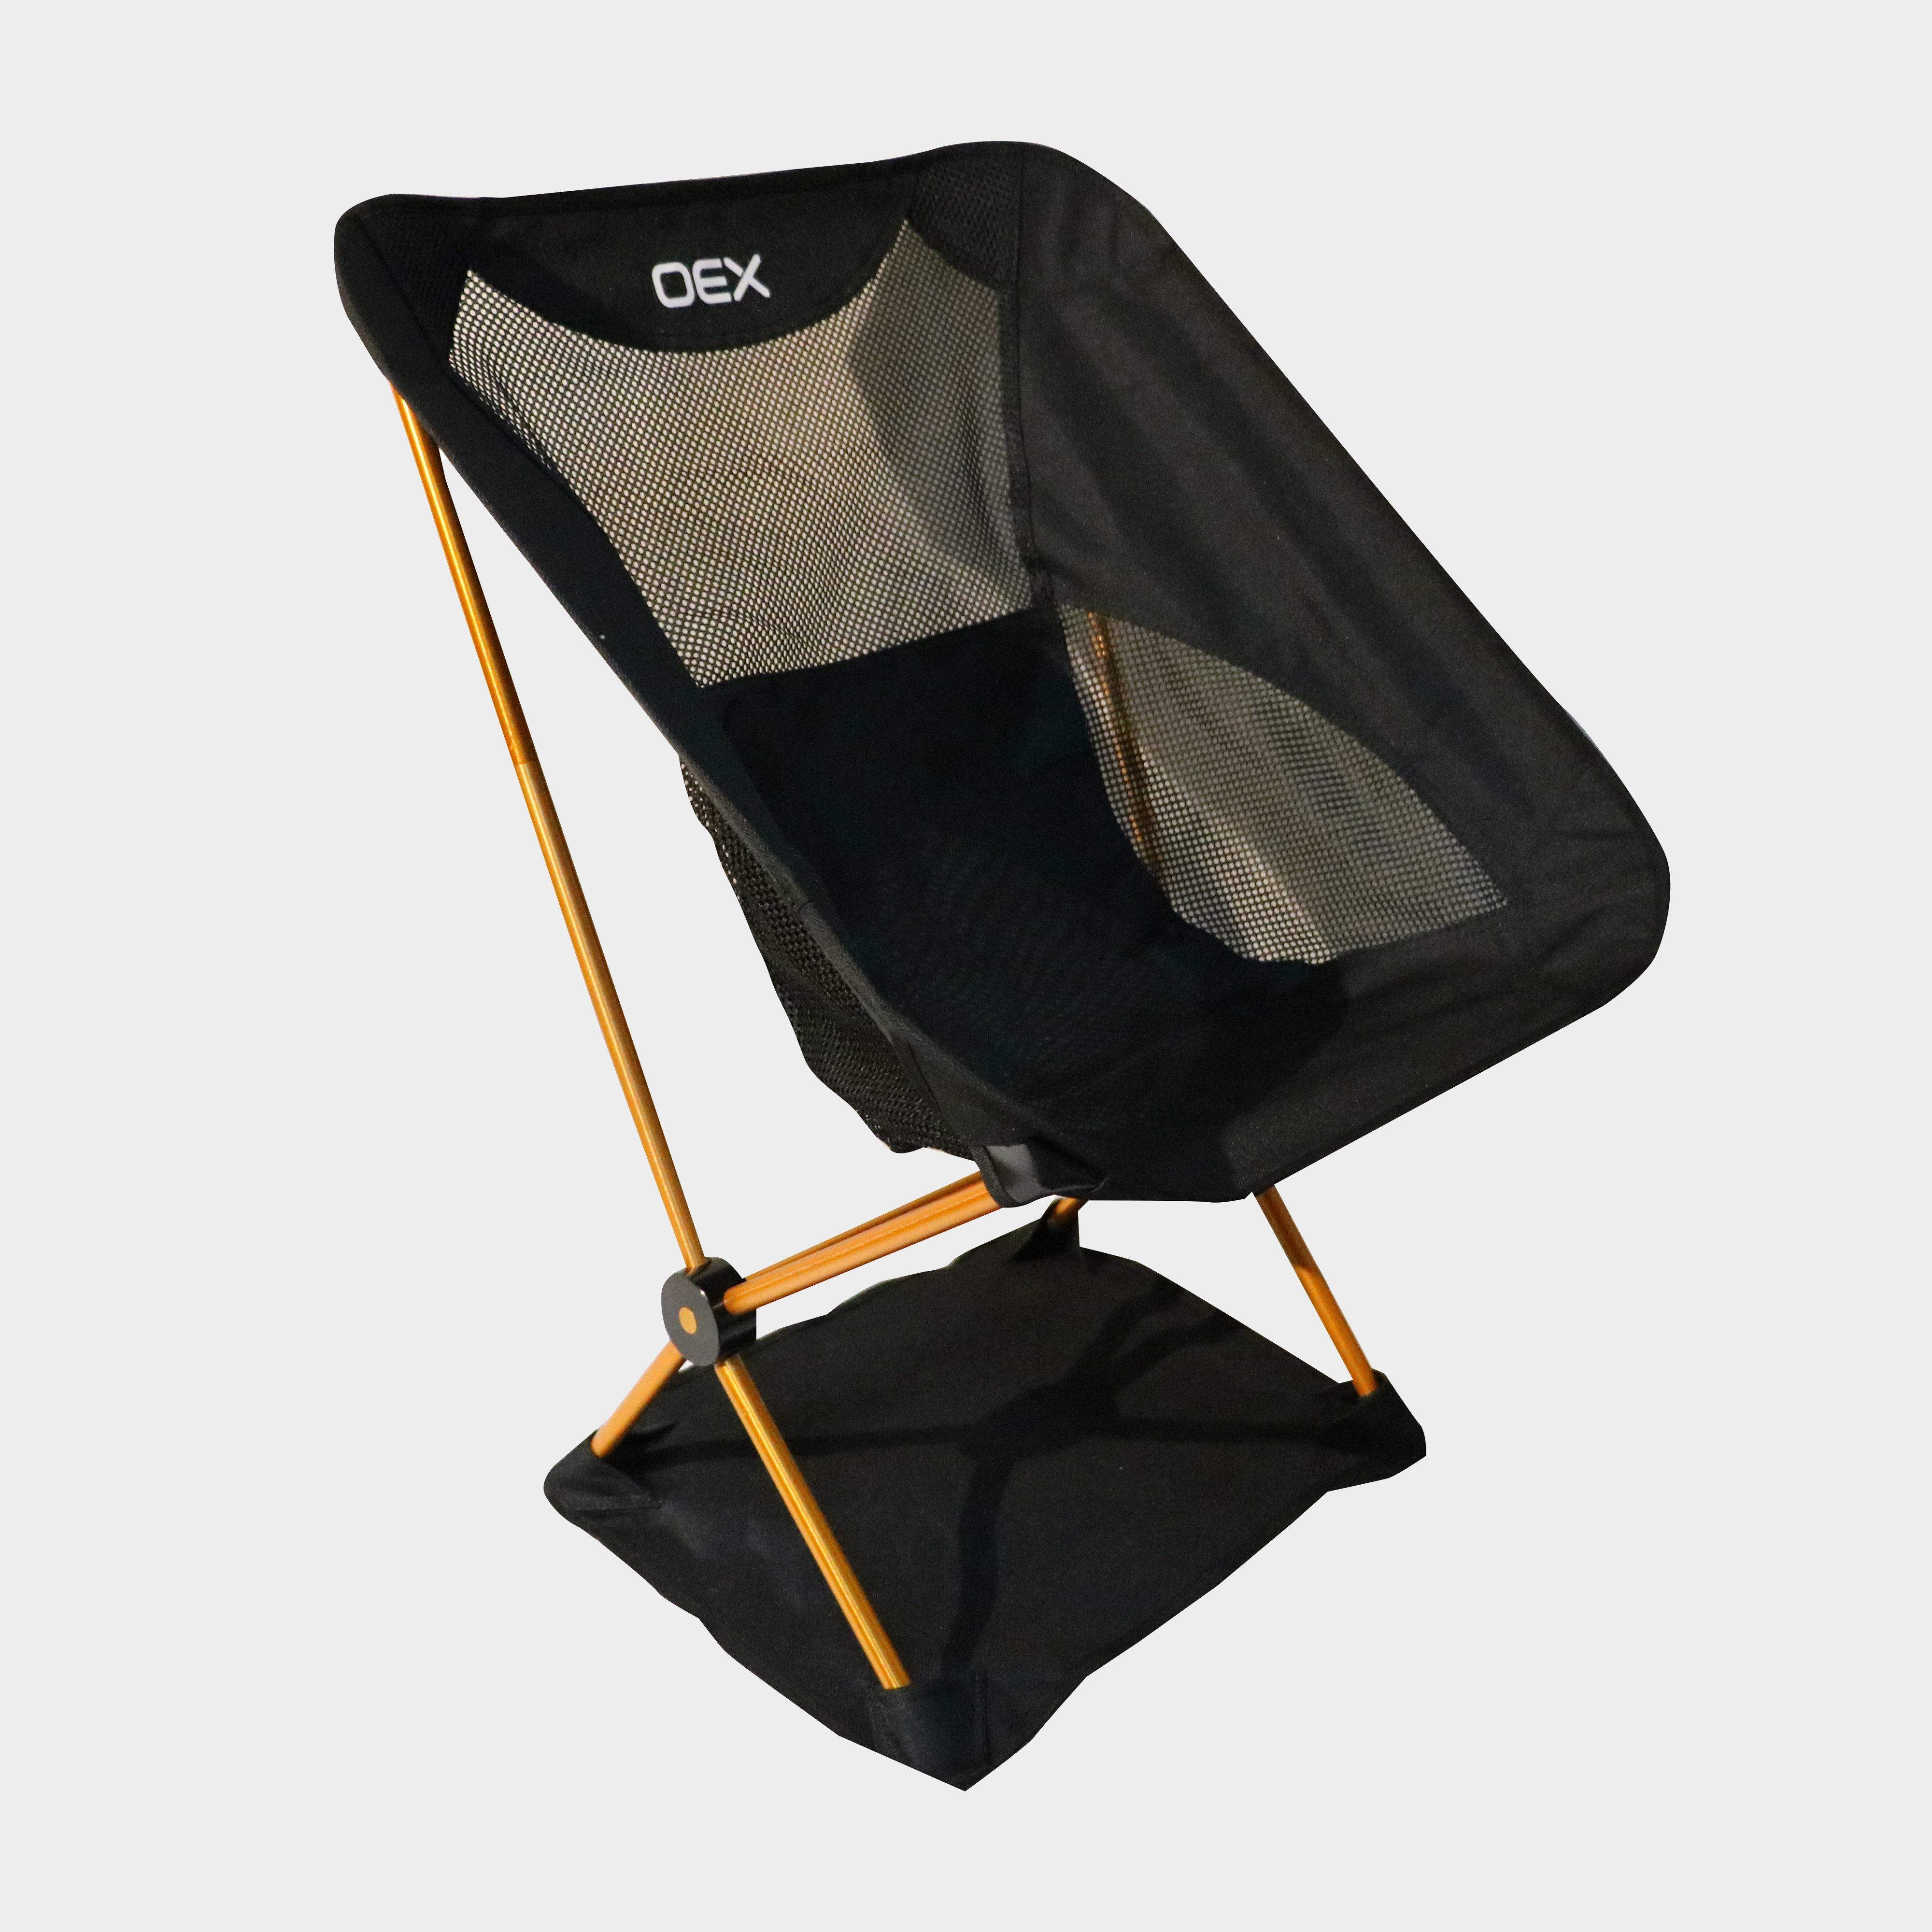 OEX Ultra Lite Camping Chair